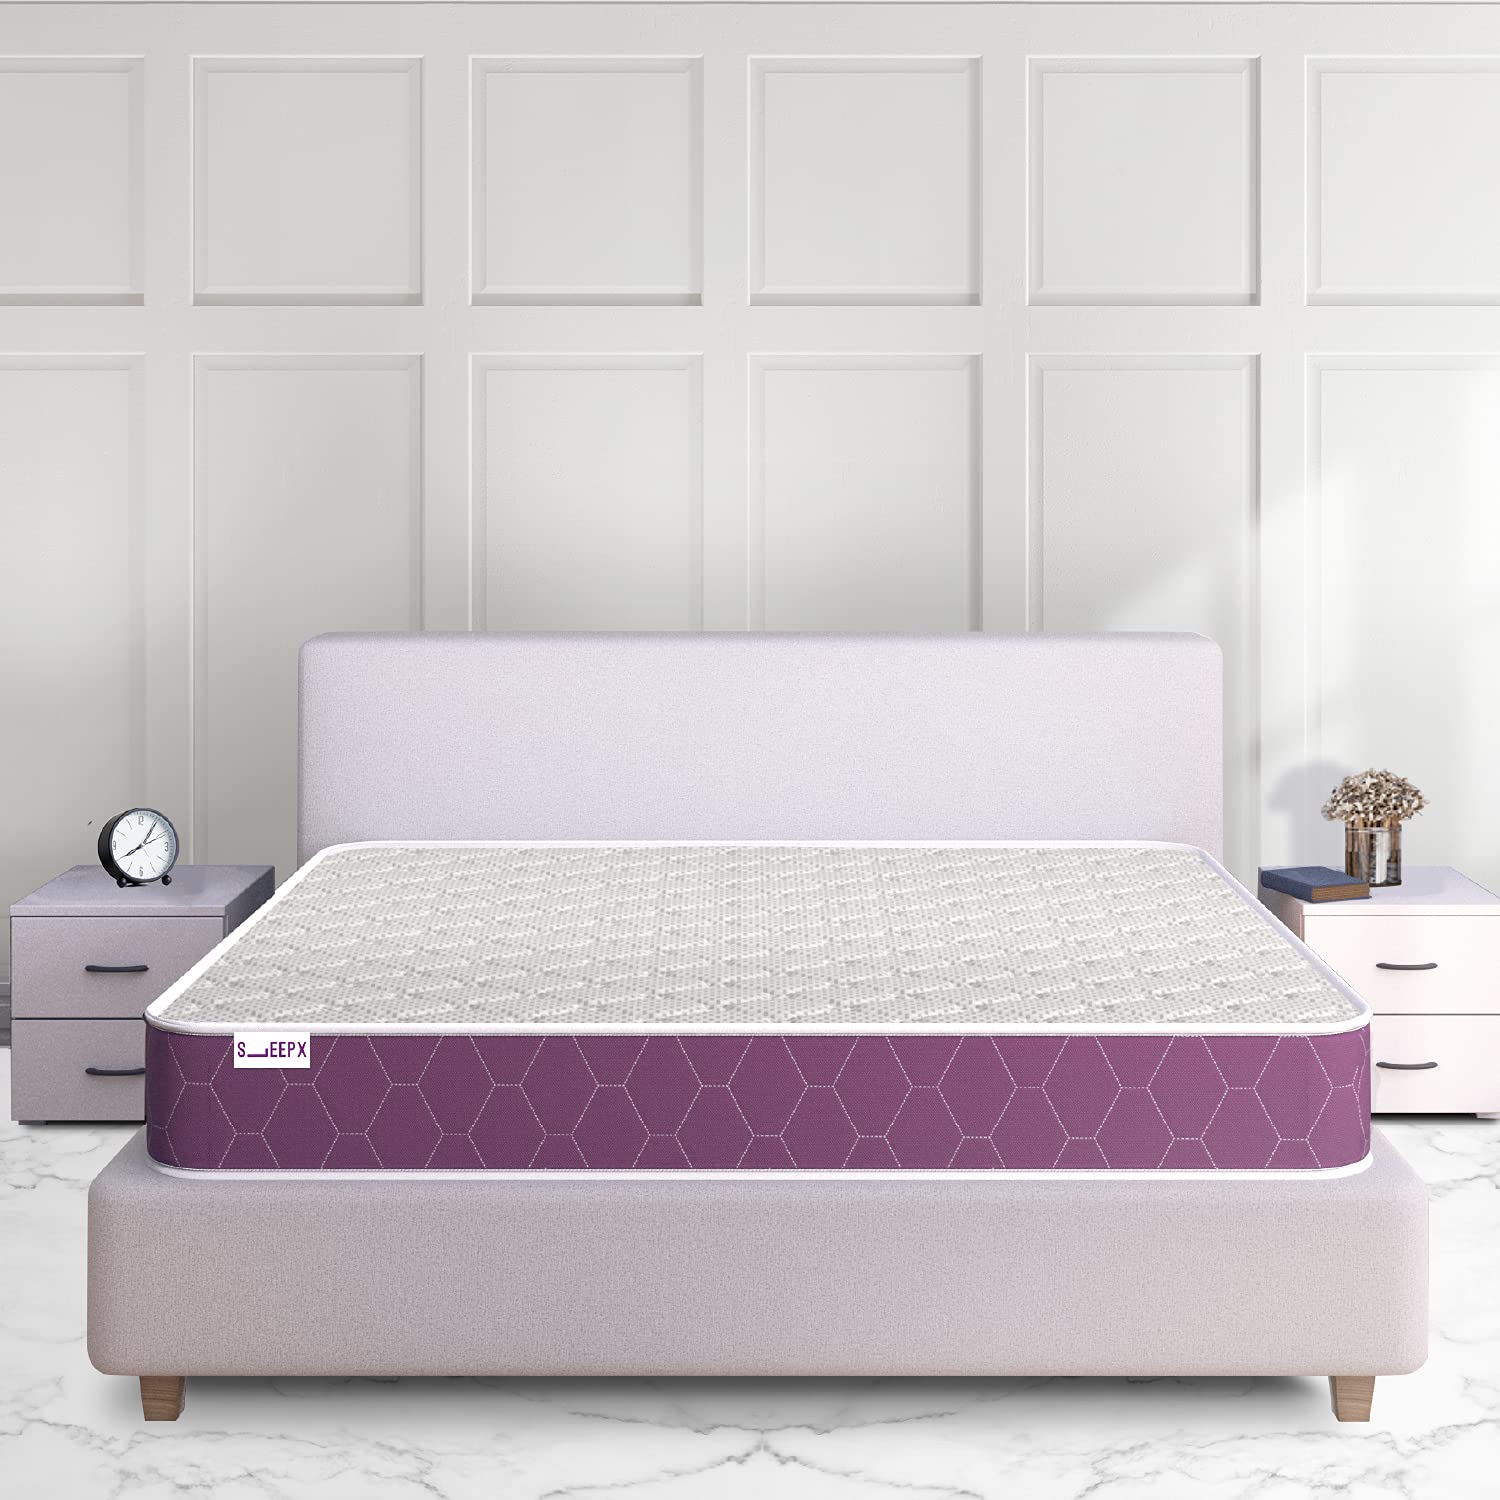 SleepX Ortho 6 inch Double Bed Size, Memory Foam Mattress (Purple, 72x48x6 )